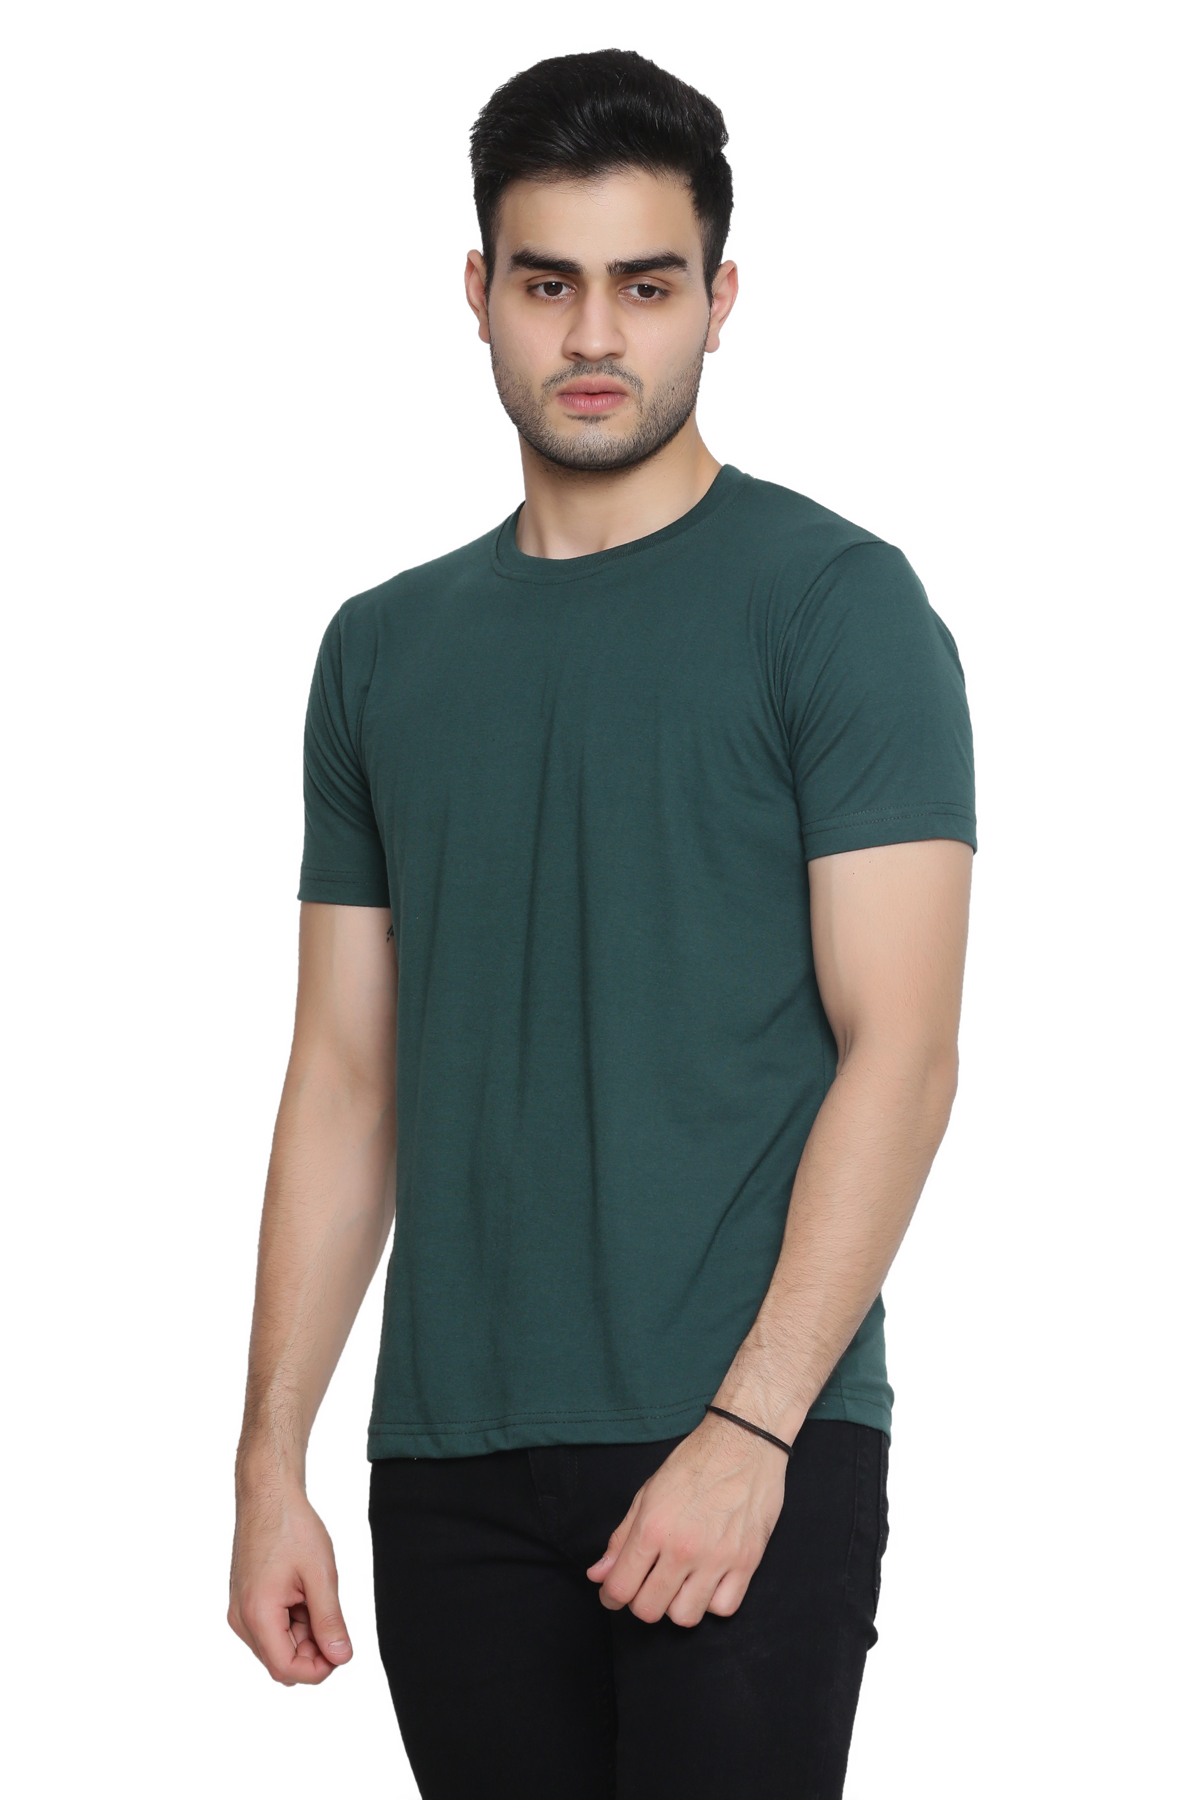 Buy GENTINO Men's Plain Bottle Green Pure Cotton T-Shirt Online @ ₹329 ...